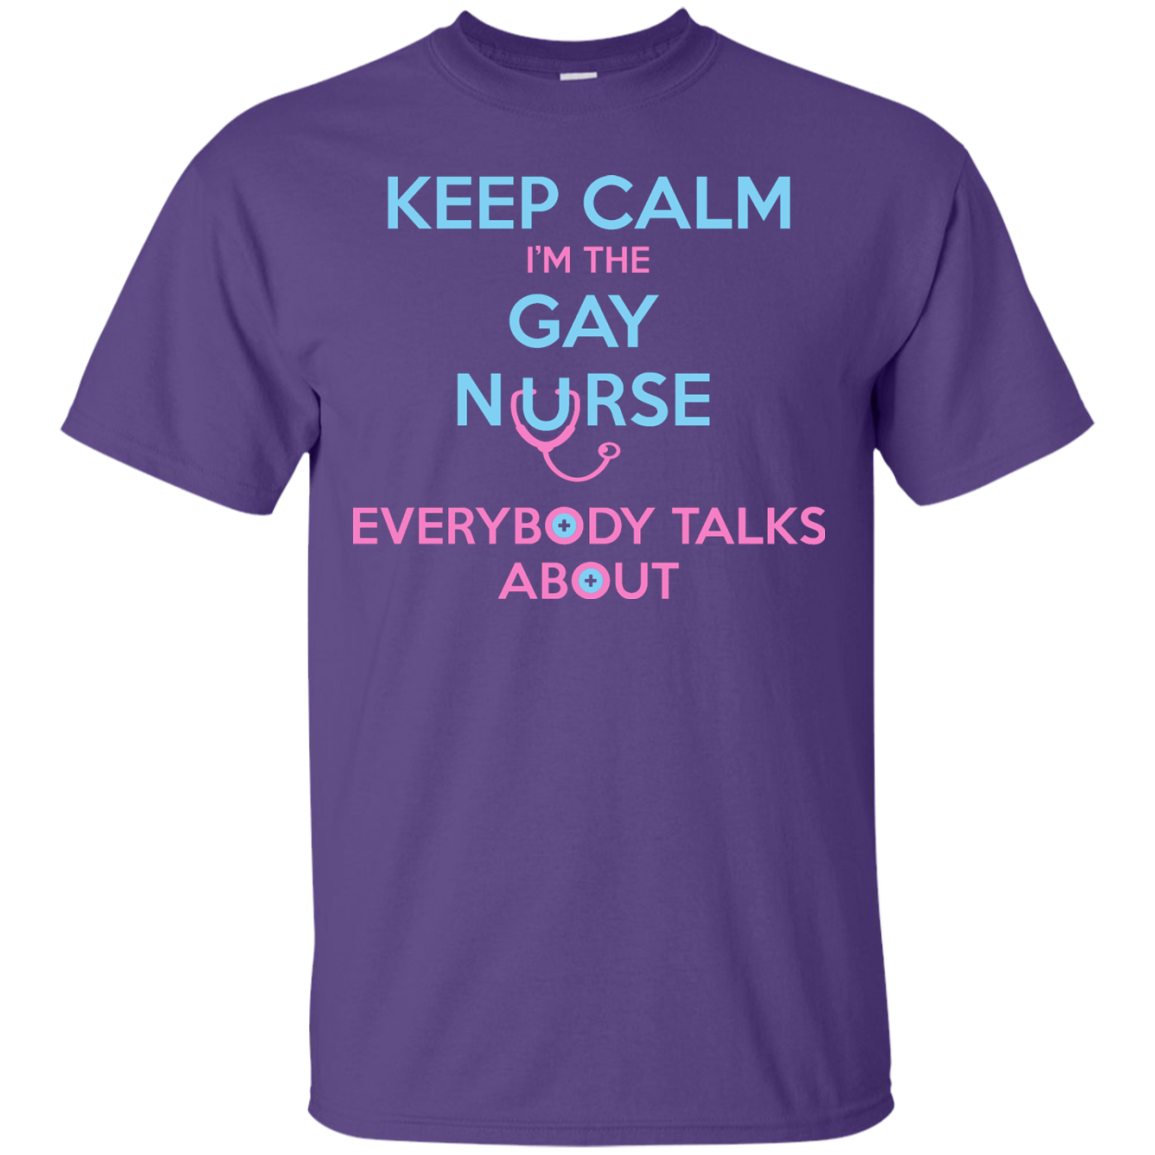 Keep Calm I'm The Gay Nurse purple round neck tshirt for Men